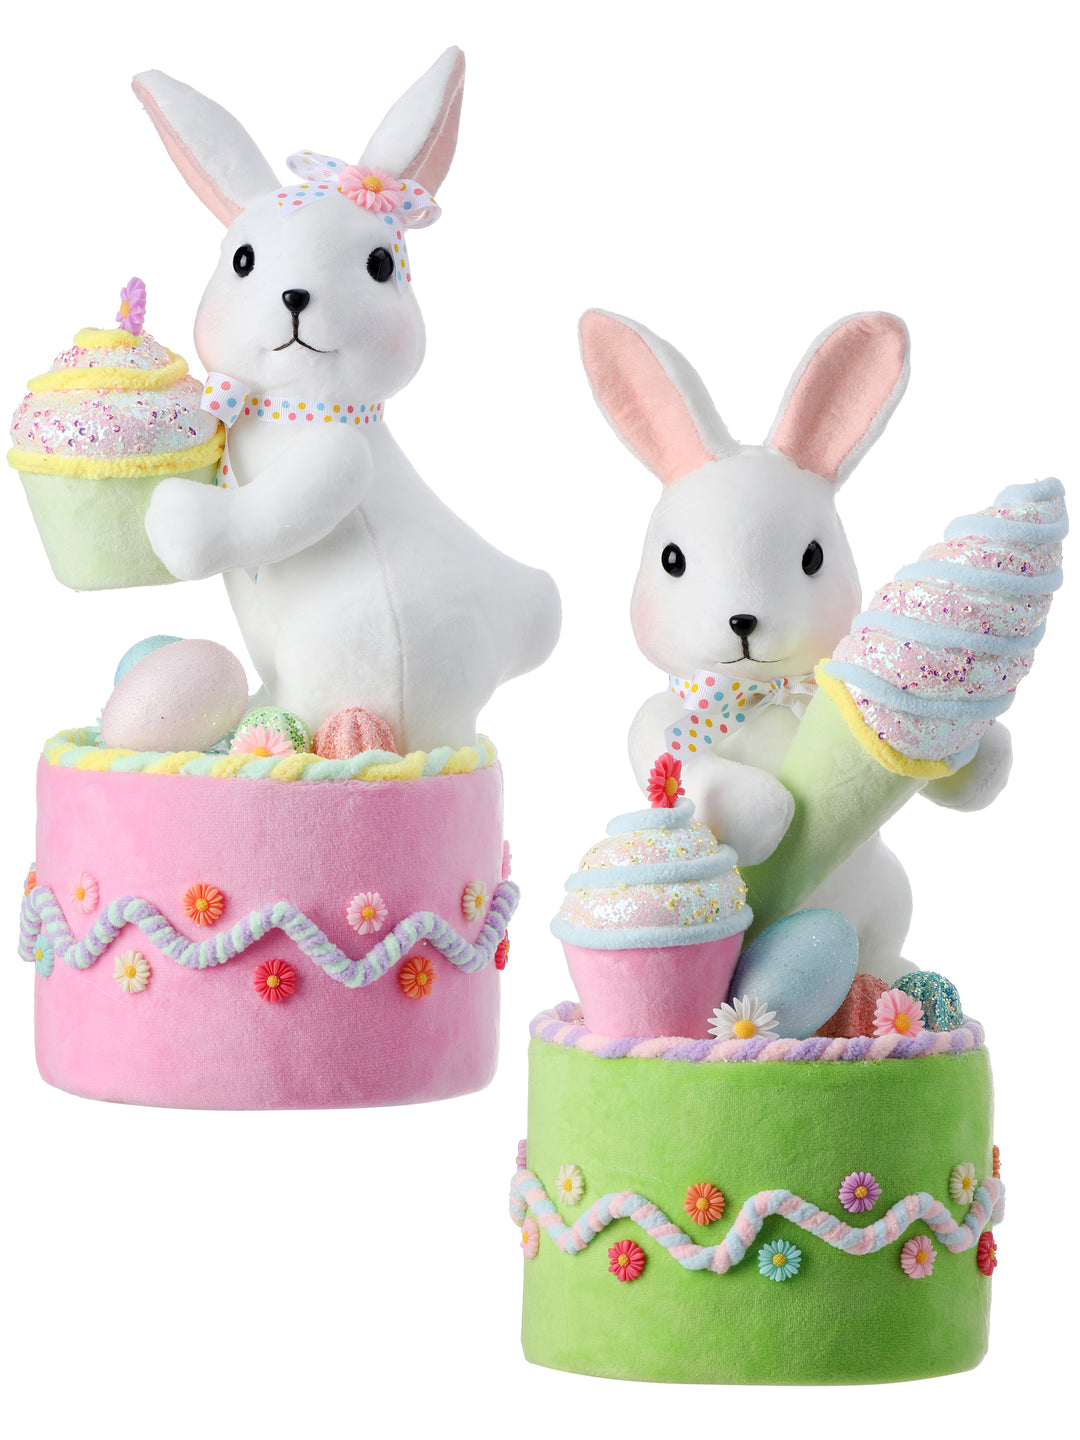 Regency 16" Styrofoam Confection Bunny Cake - Choice of one Style